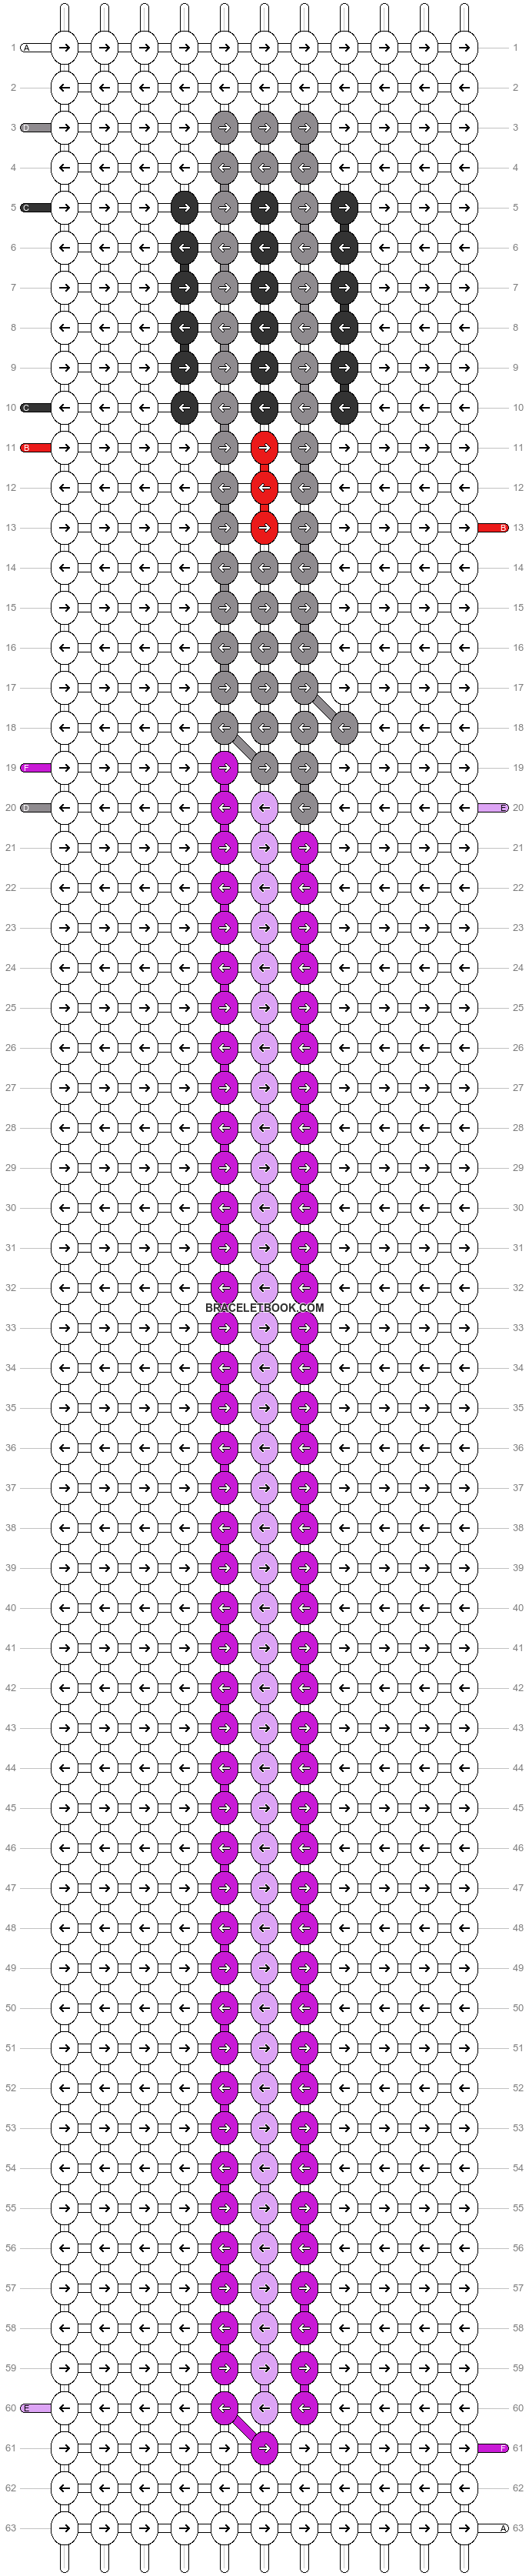 Alpha pattern #39836 variation #49970 pattern